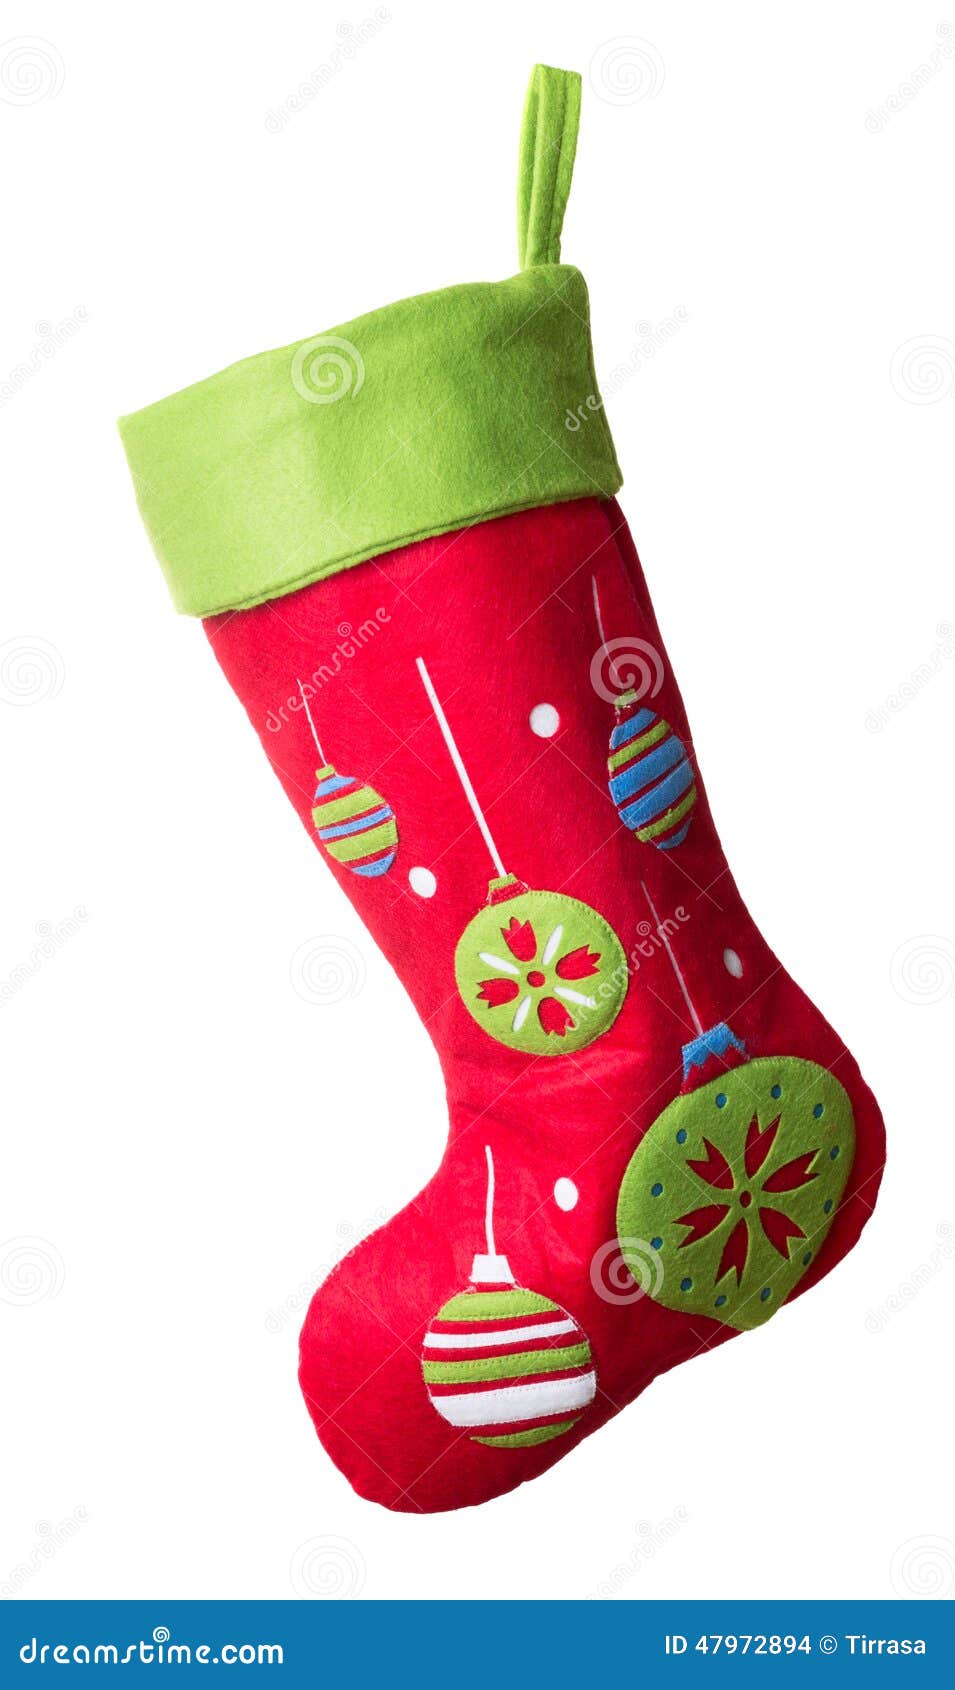 Christmas stocking stock photo. Image of soft, stuffed - 47972894